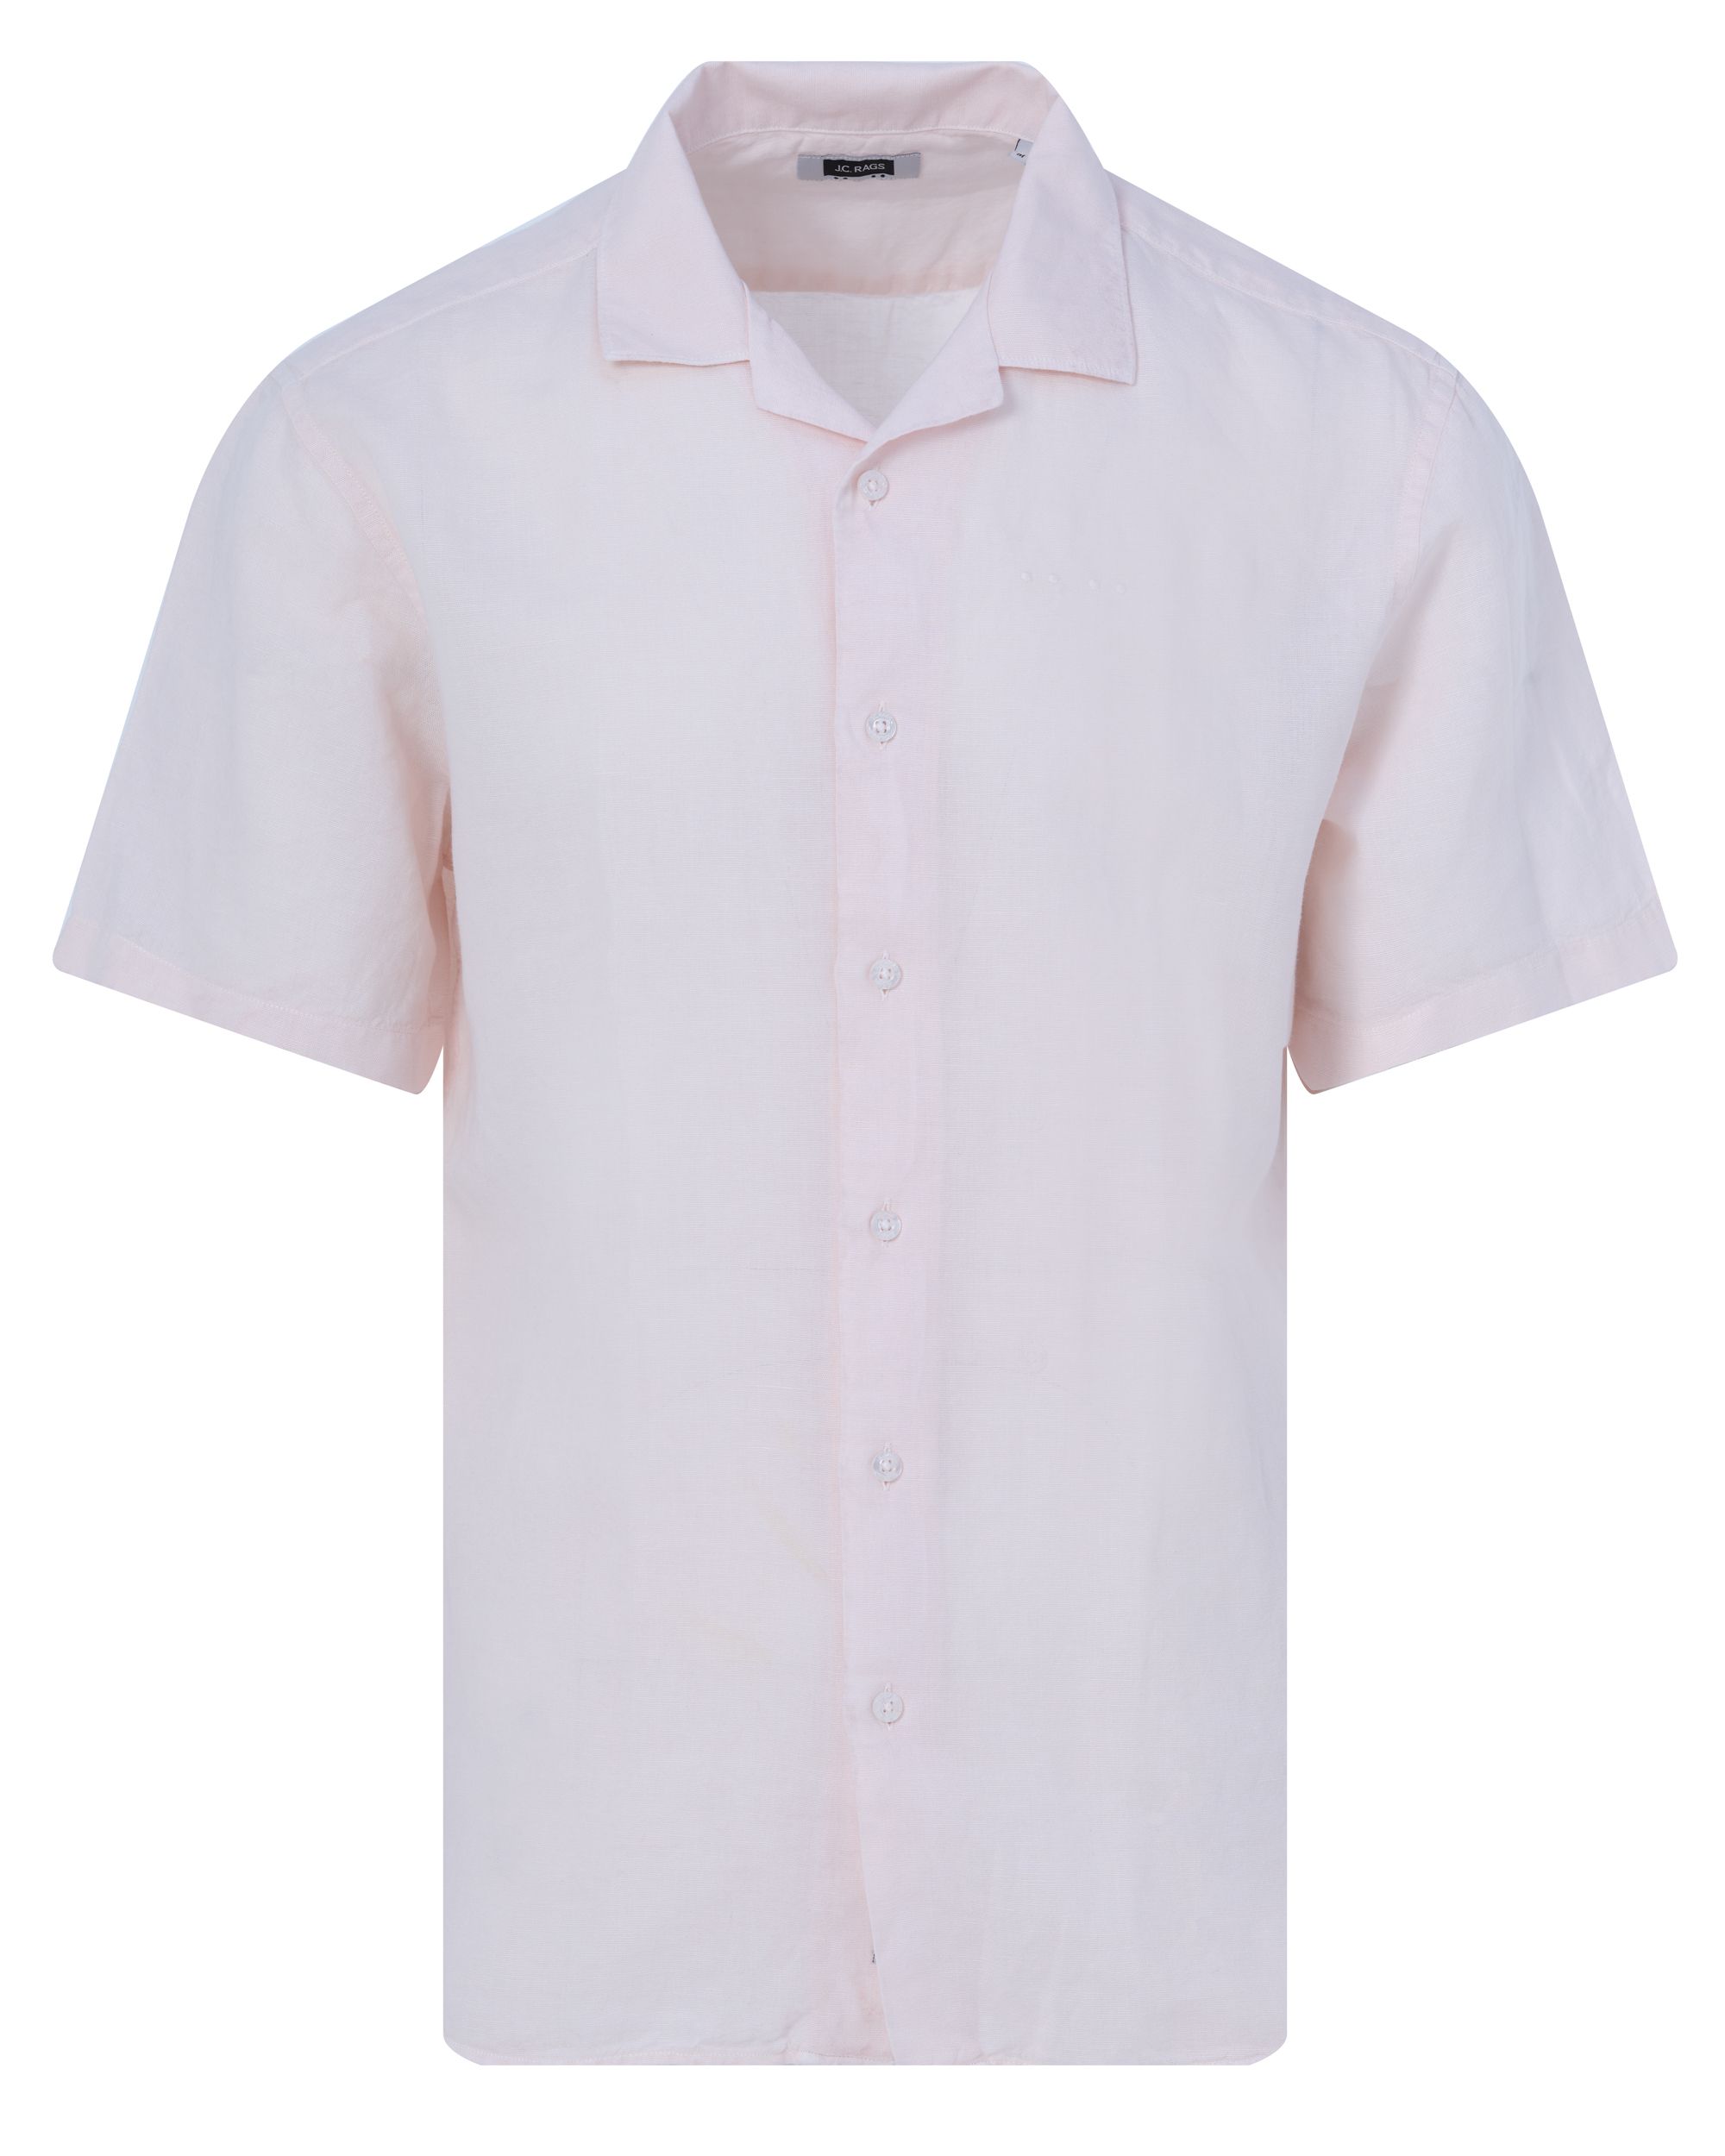 J.C. RAGS Elvis Casual Overhemd KM Pink Salt 082305-005-XXL